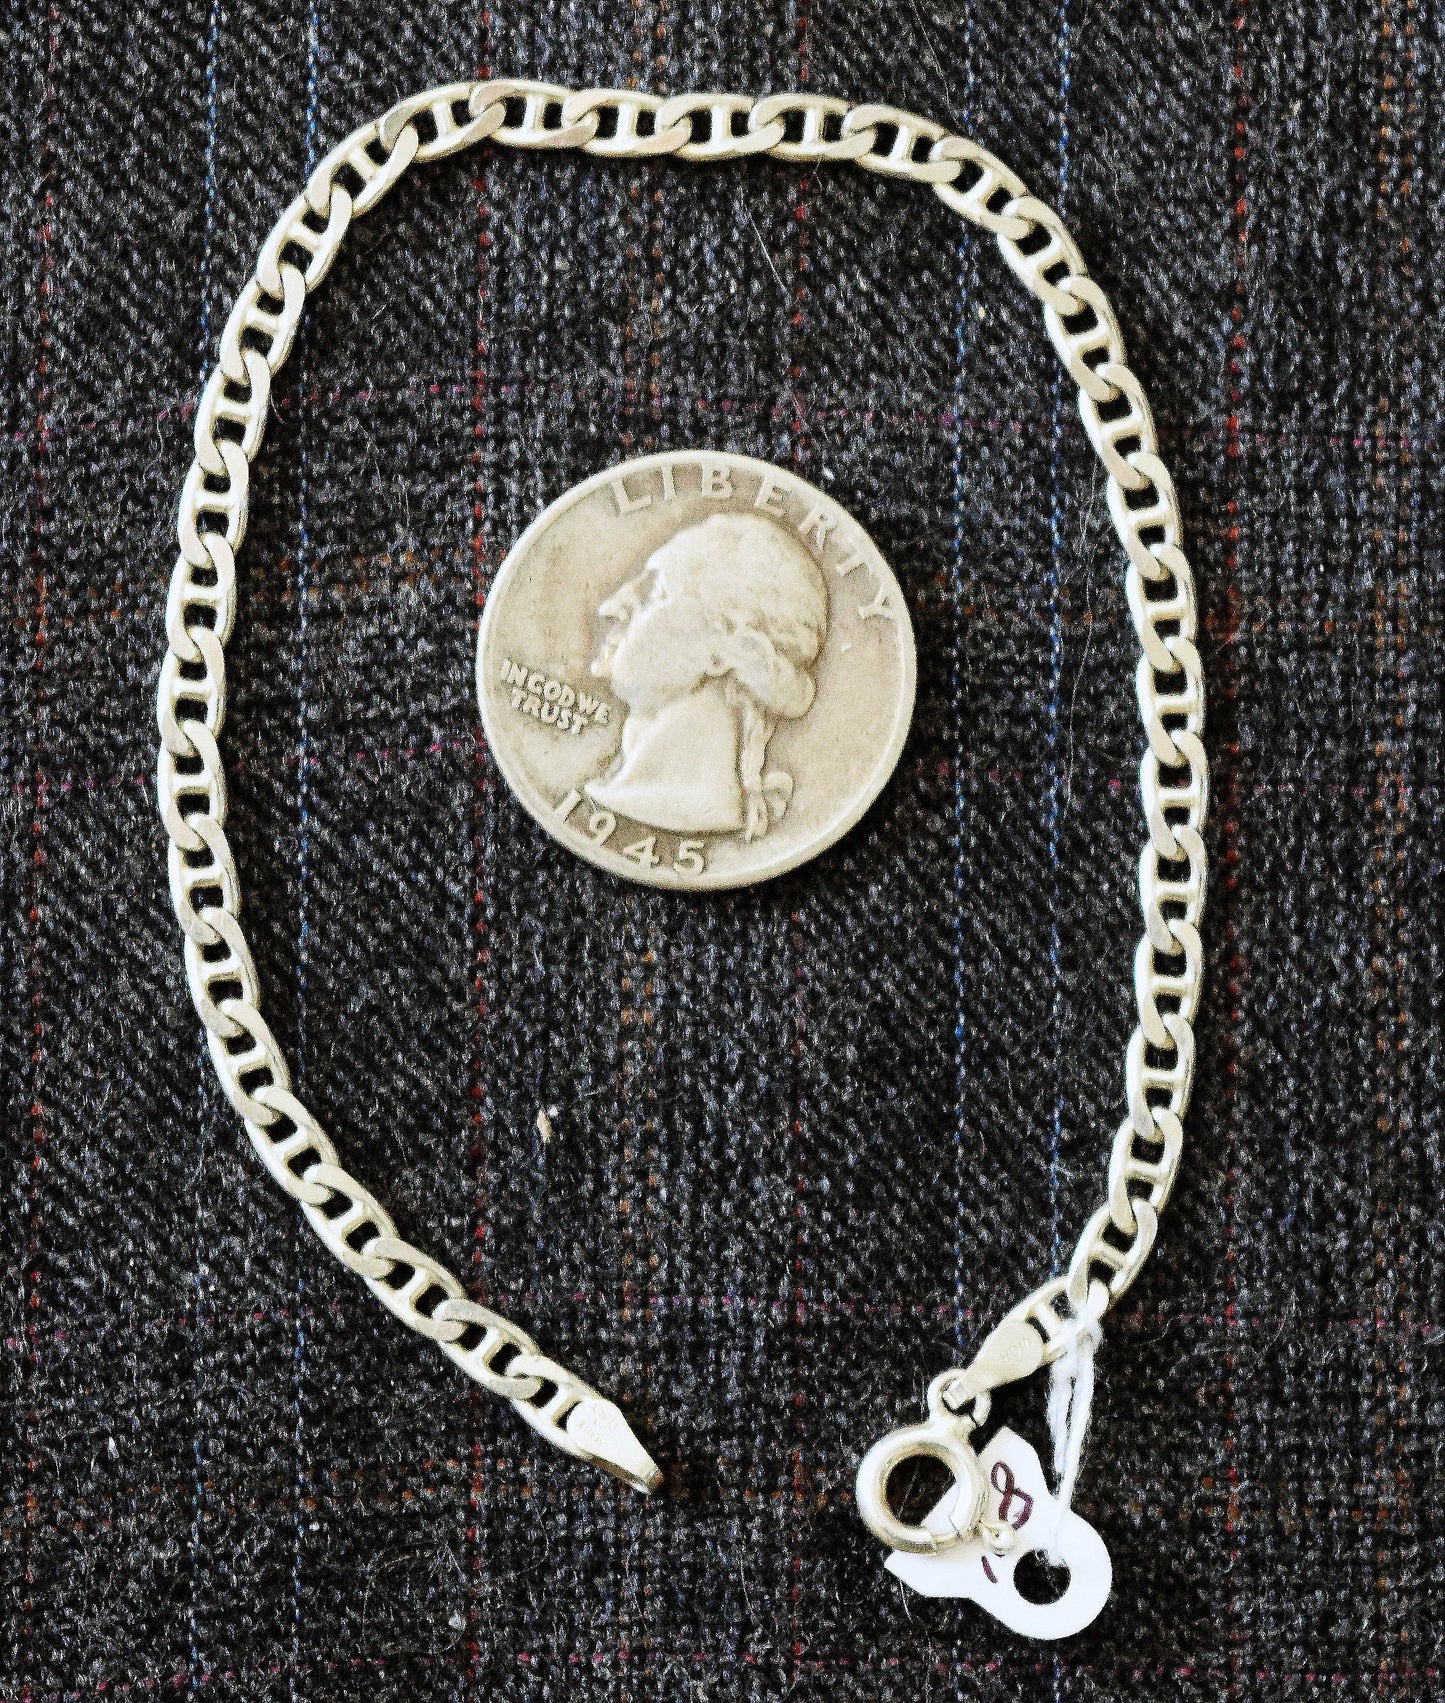 8 inch sterling silver bracelet